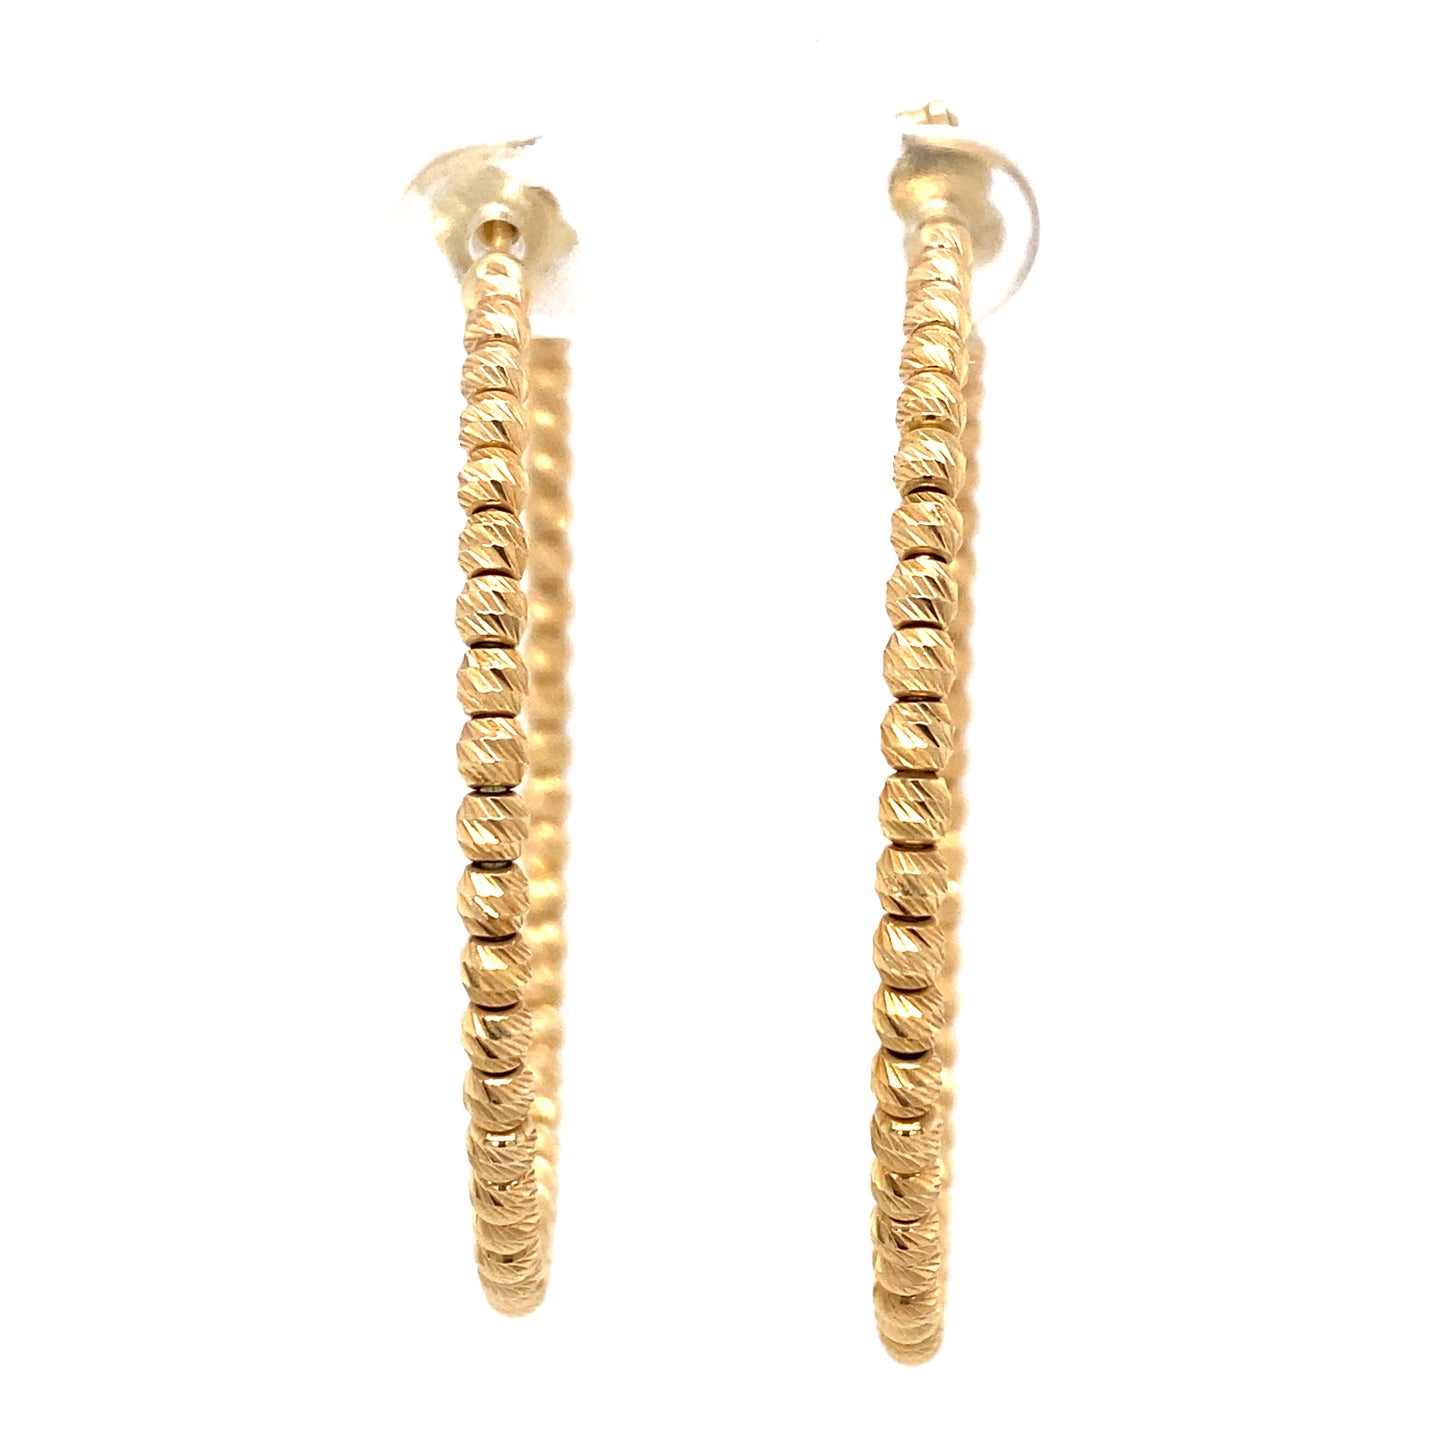 Circa 1970s Diamond Cut Bead Hoop Earrings in 14K Gold